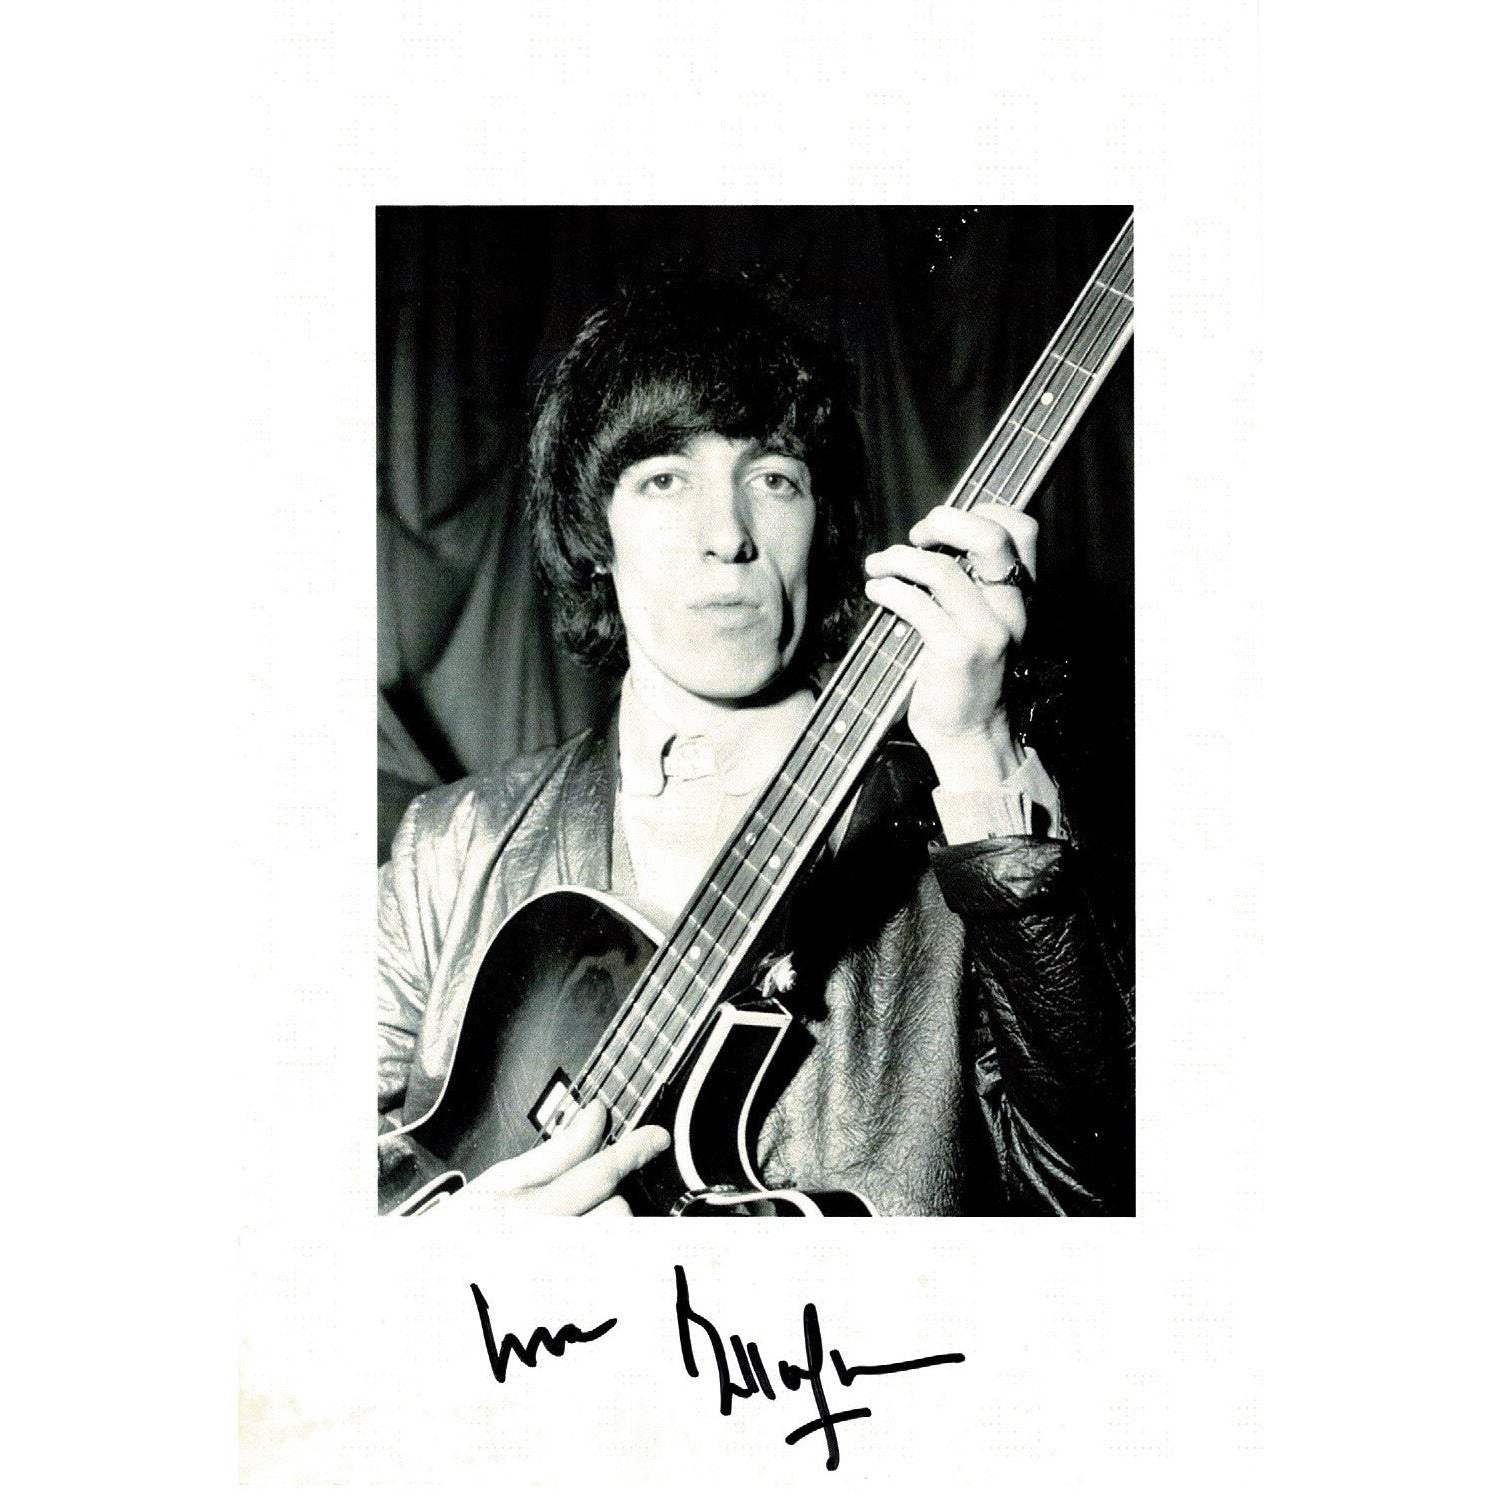 Bill Wyman 7" x 5" signed photograph - The Memorabilia Club